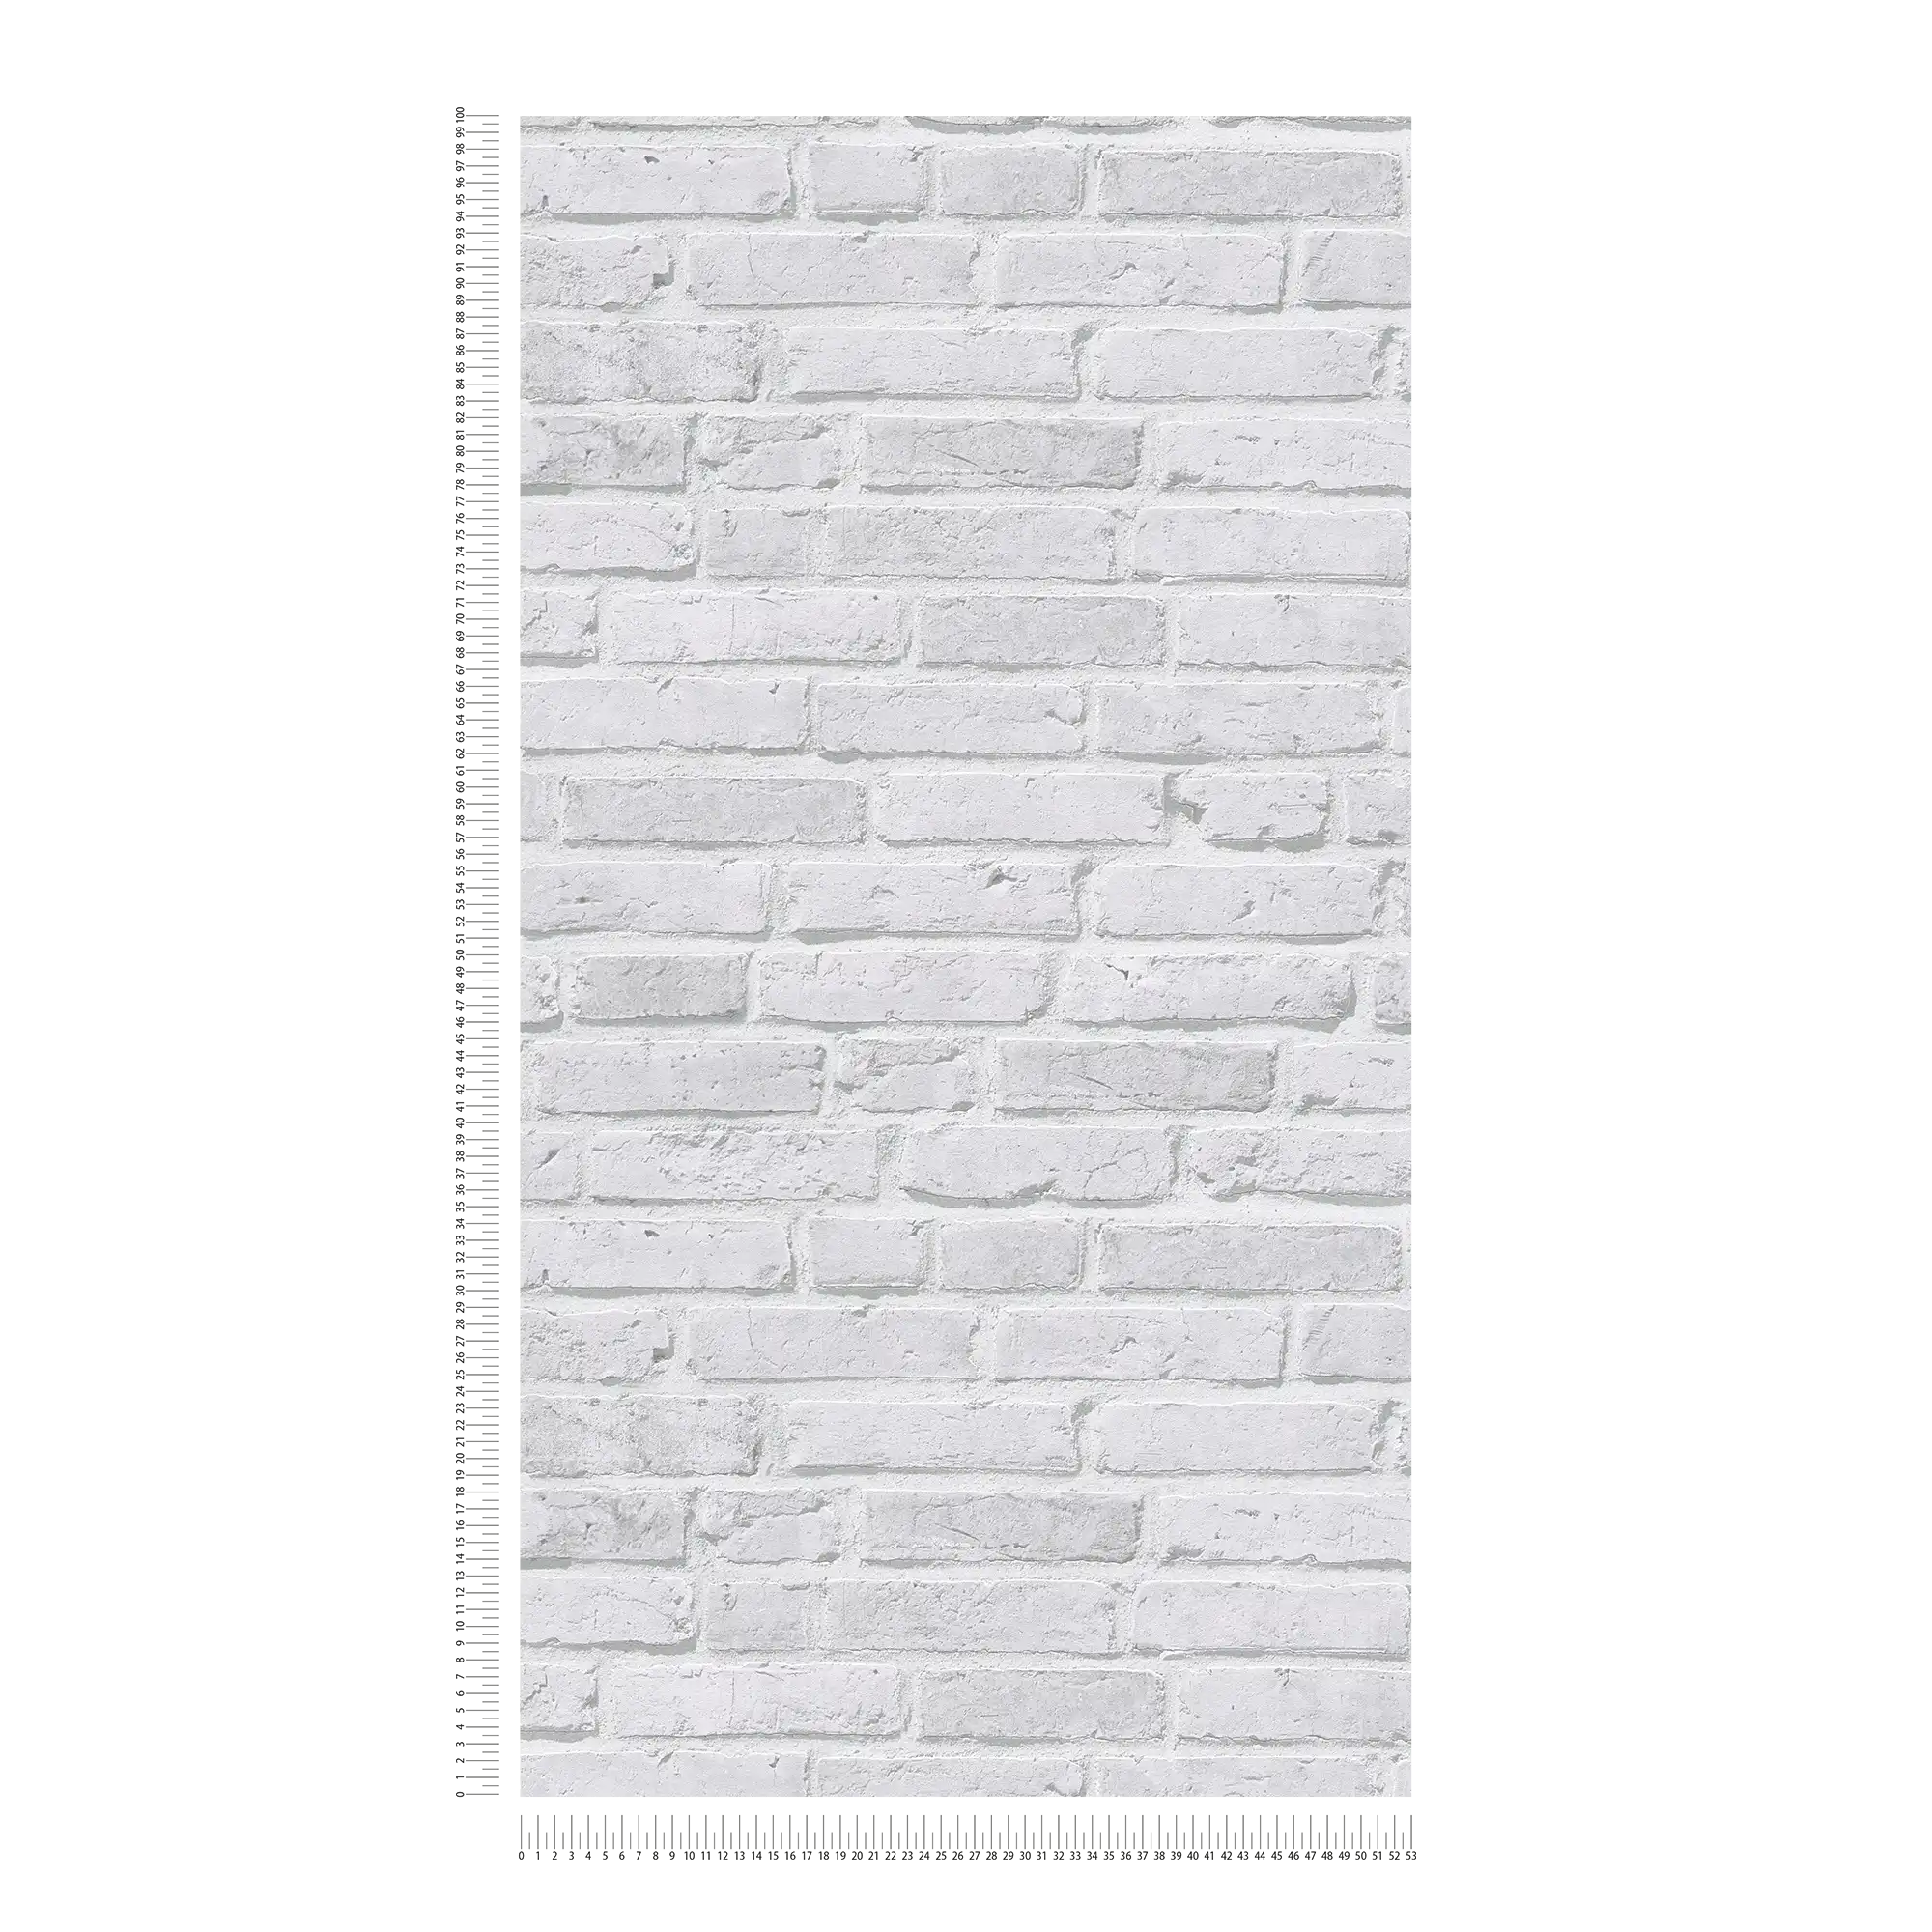             Bright brick wallpaper with 3D look - grey
        